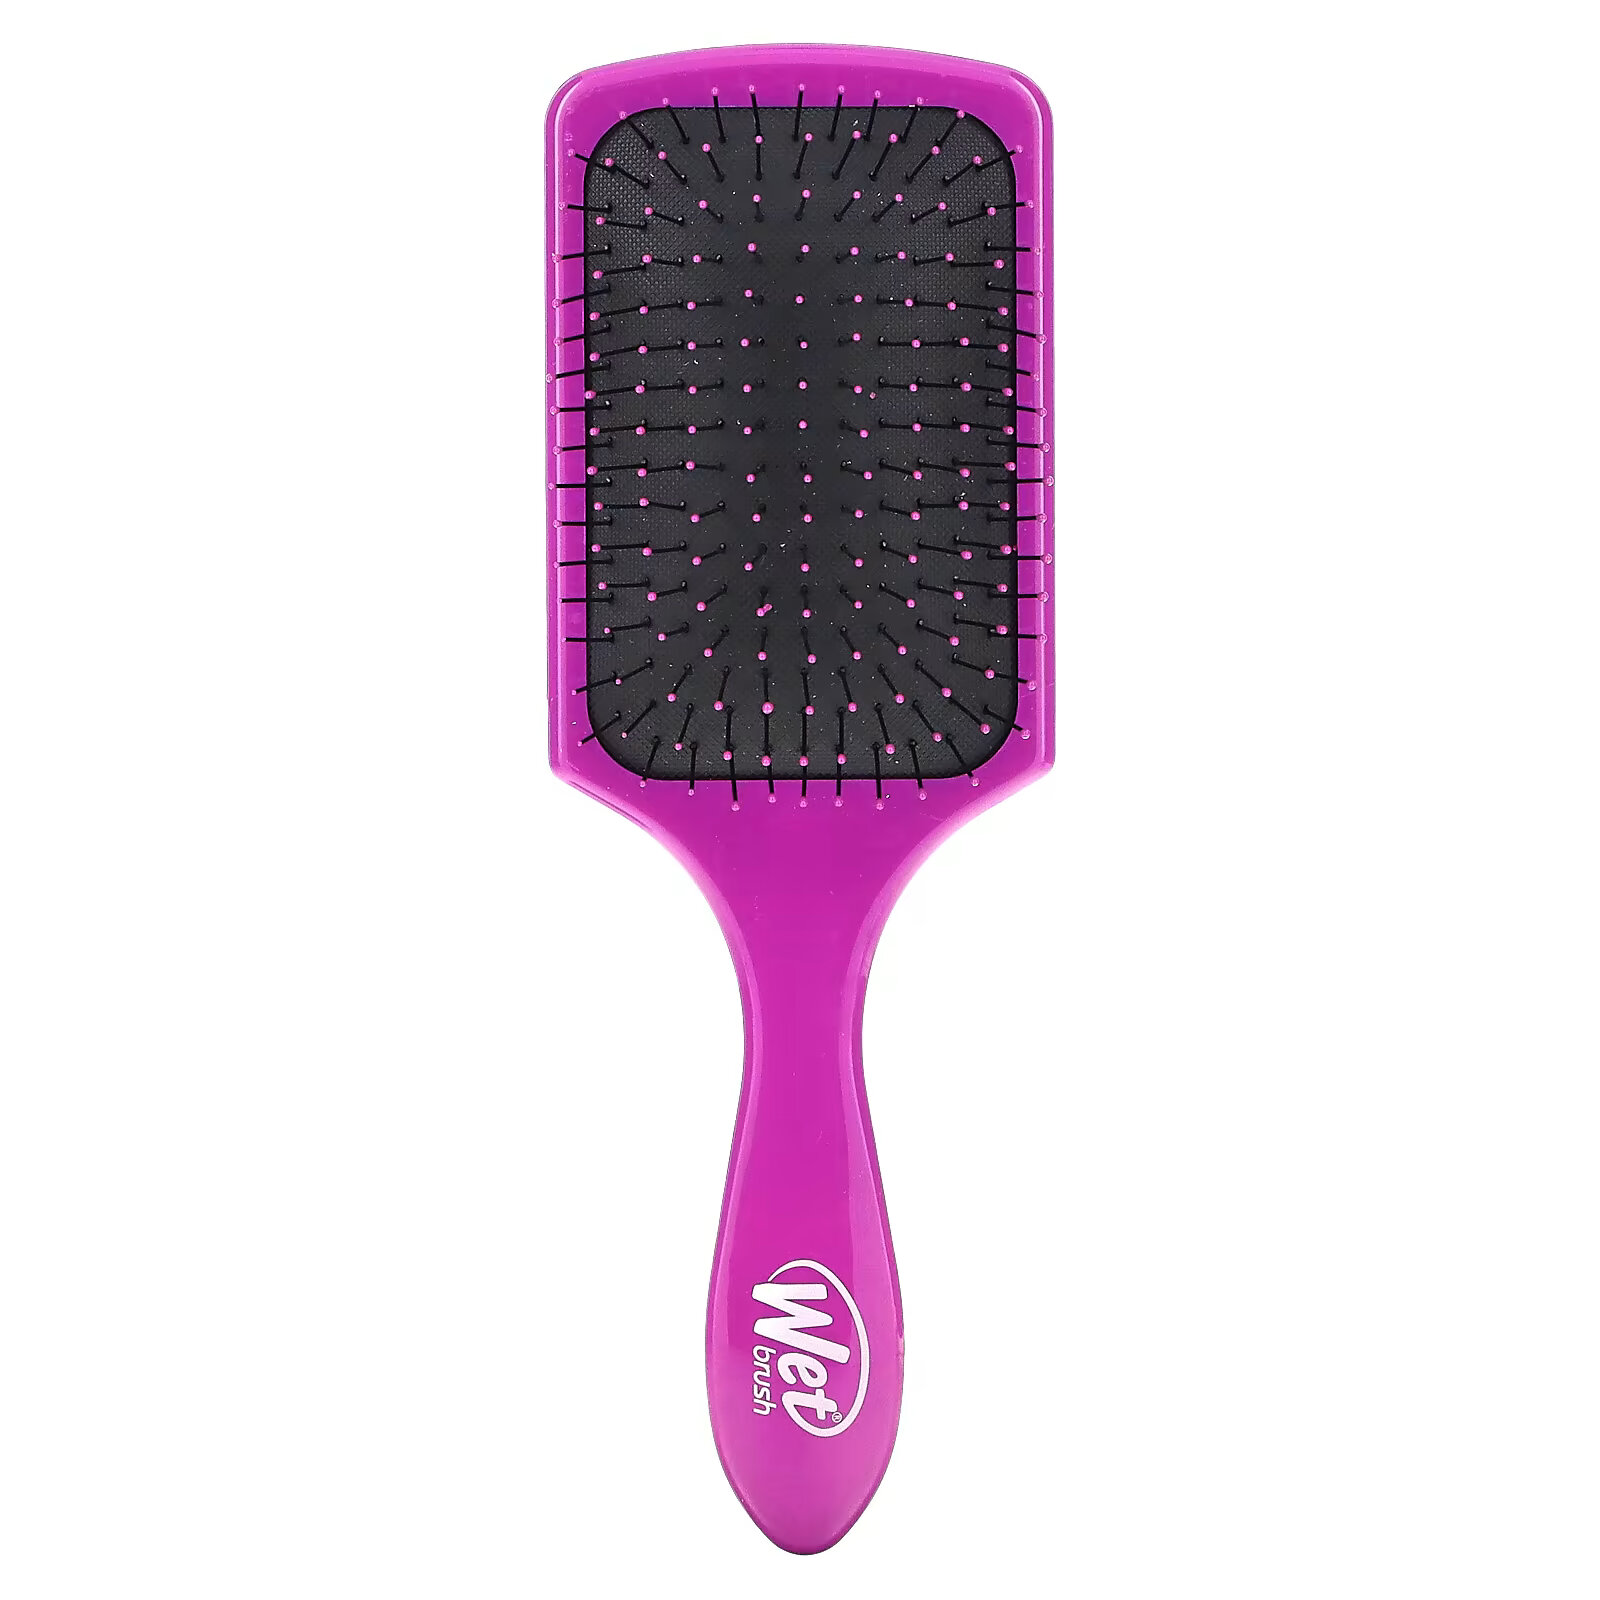 Wet Brush, Paddle Detangler Brush, щетка для легкого расчесывания, пурпурный, 1 шт. кисти paddle detangler wet brush розовый